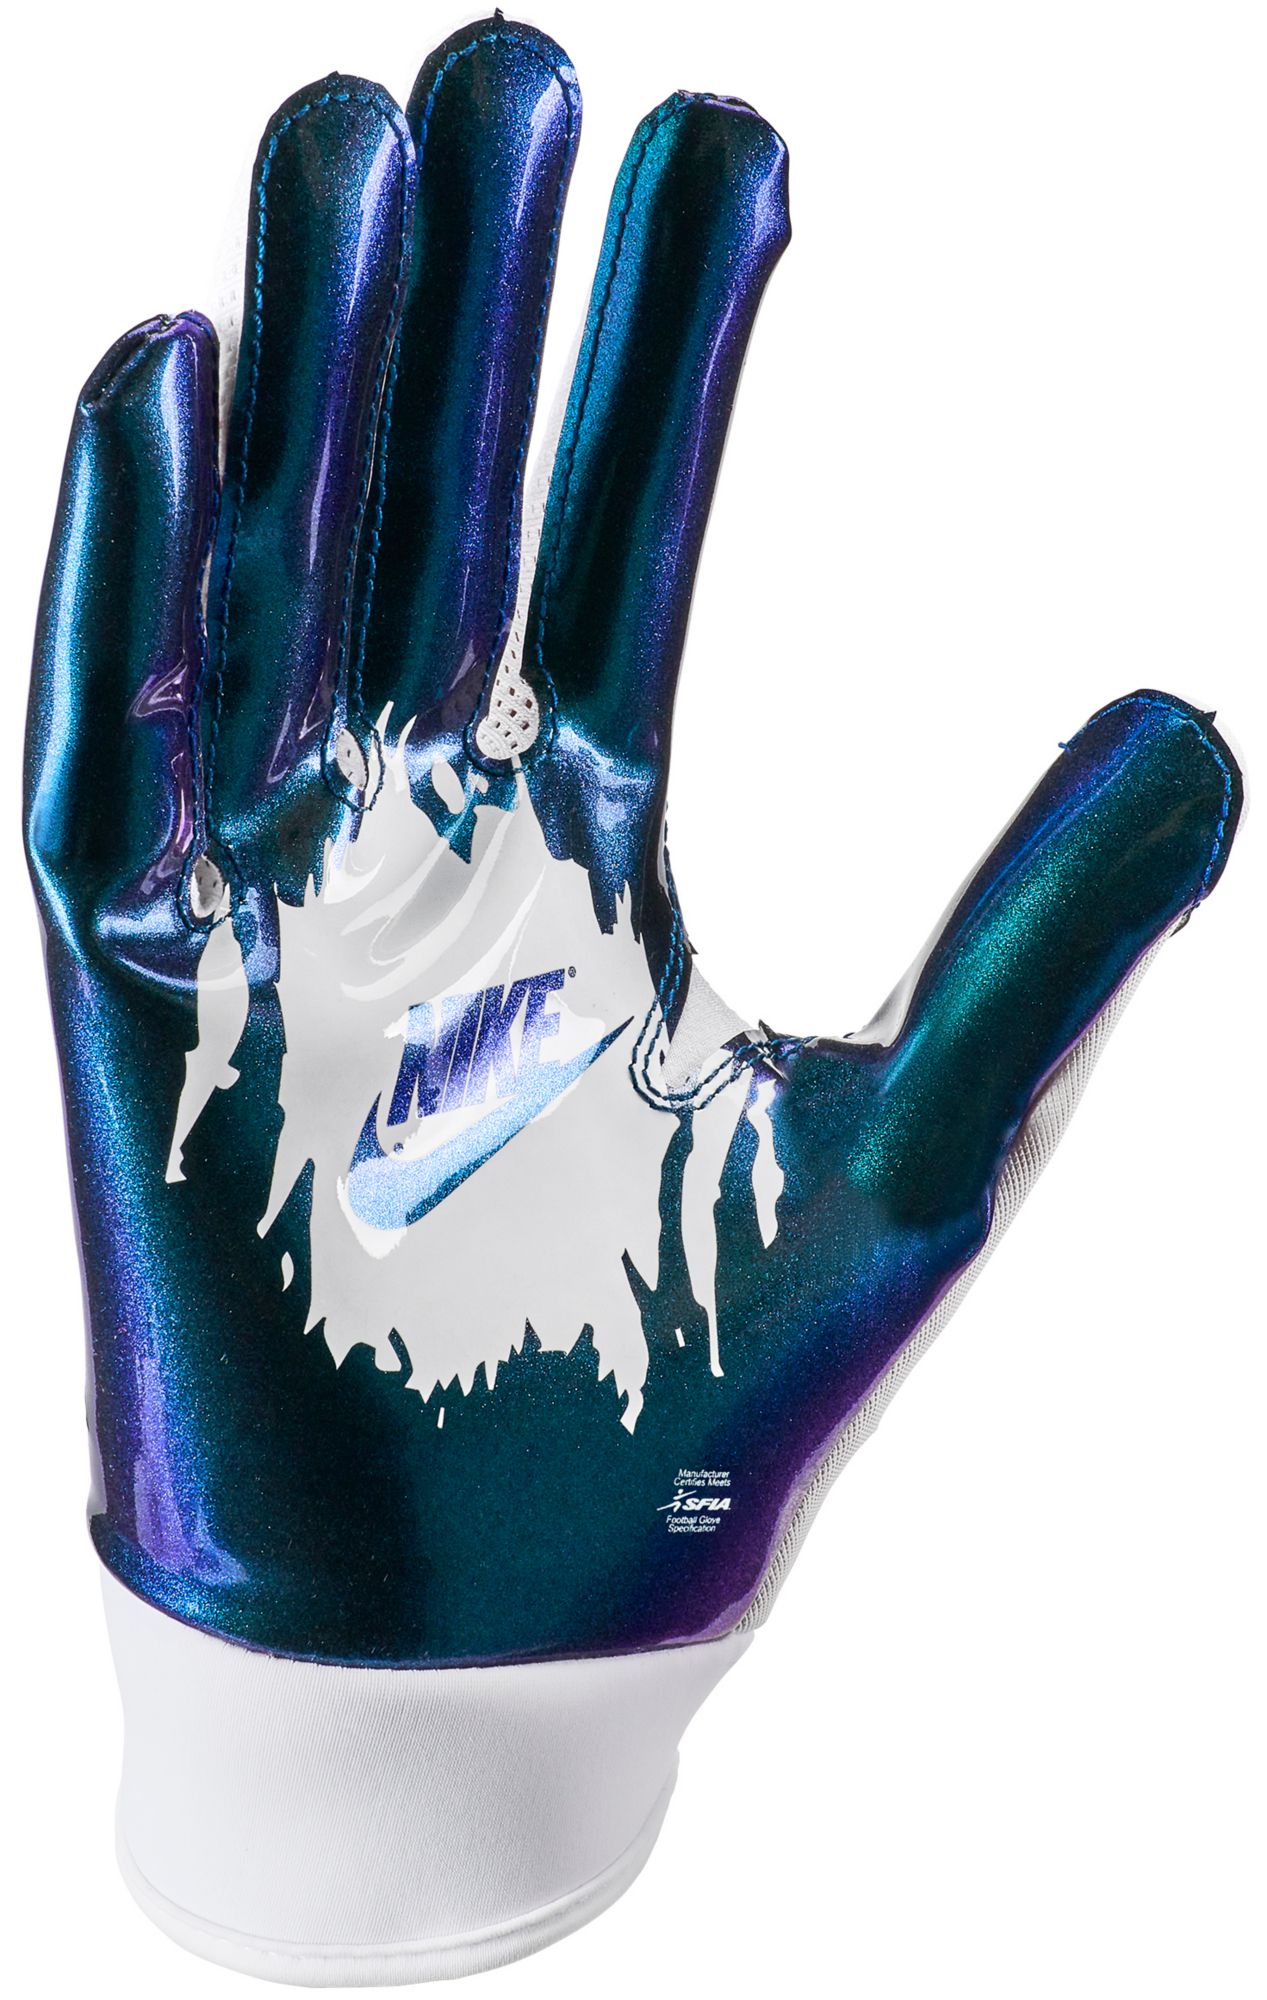 Nike Youth Vapor Jet 8.0 Iridescent Football Glove | The Market Place